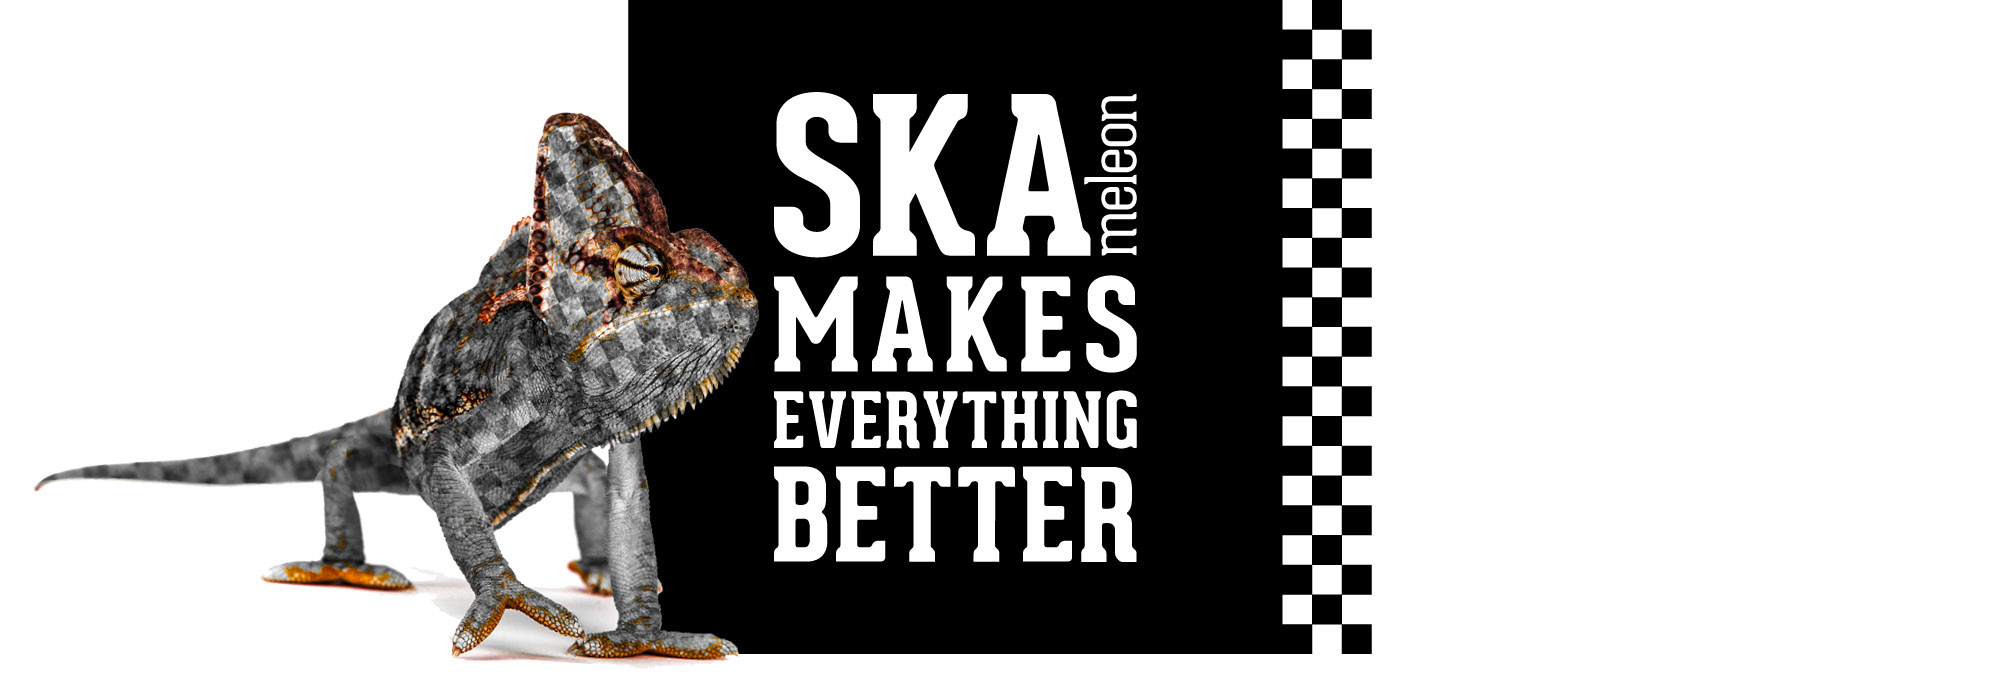 ska makes everything better logo mit skameleon